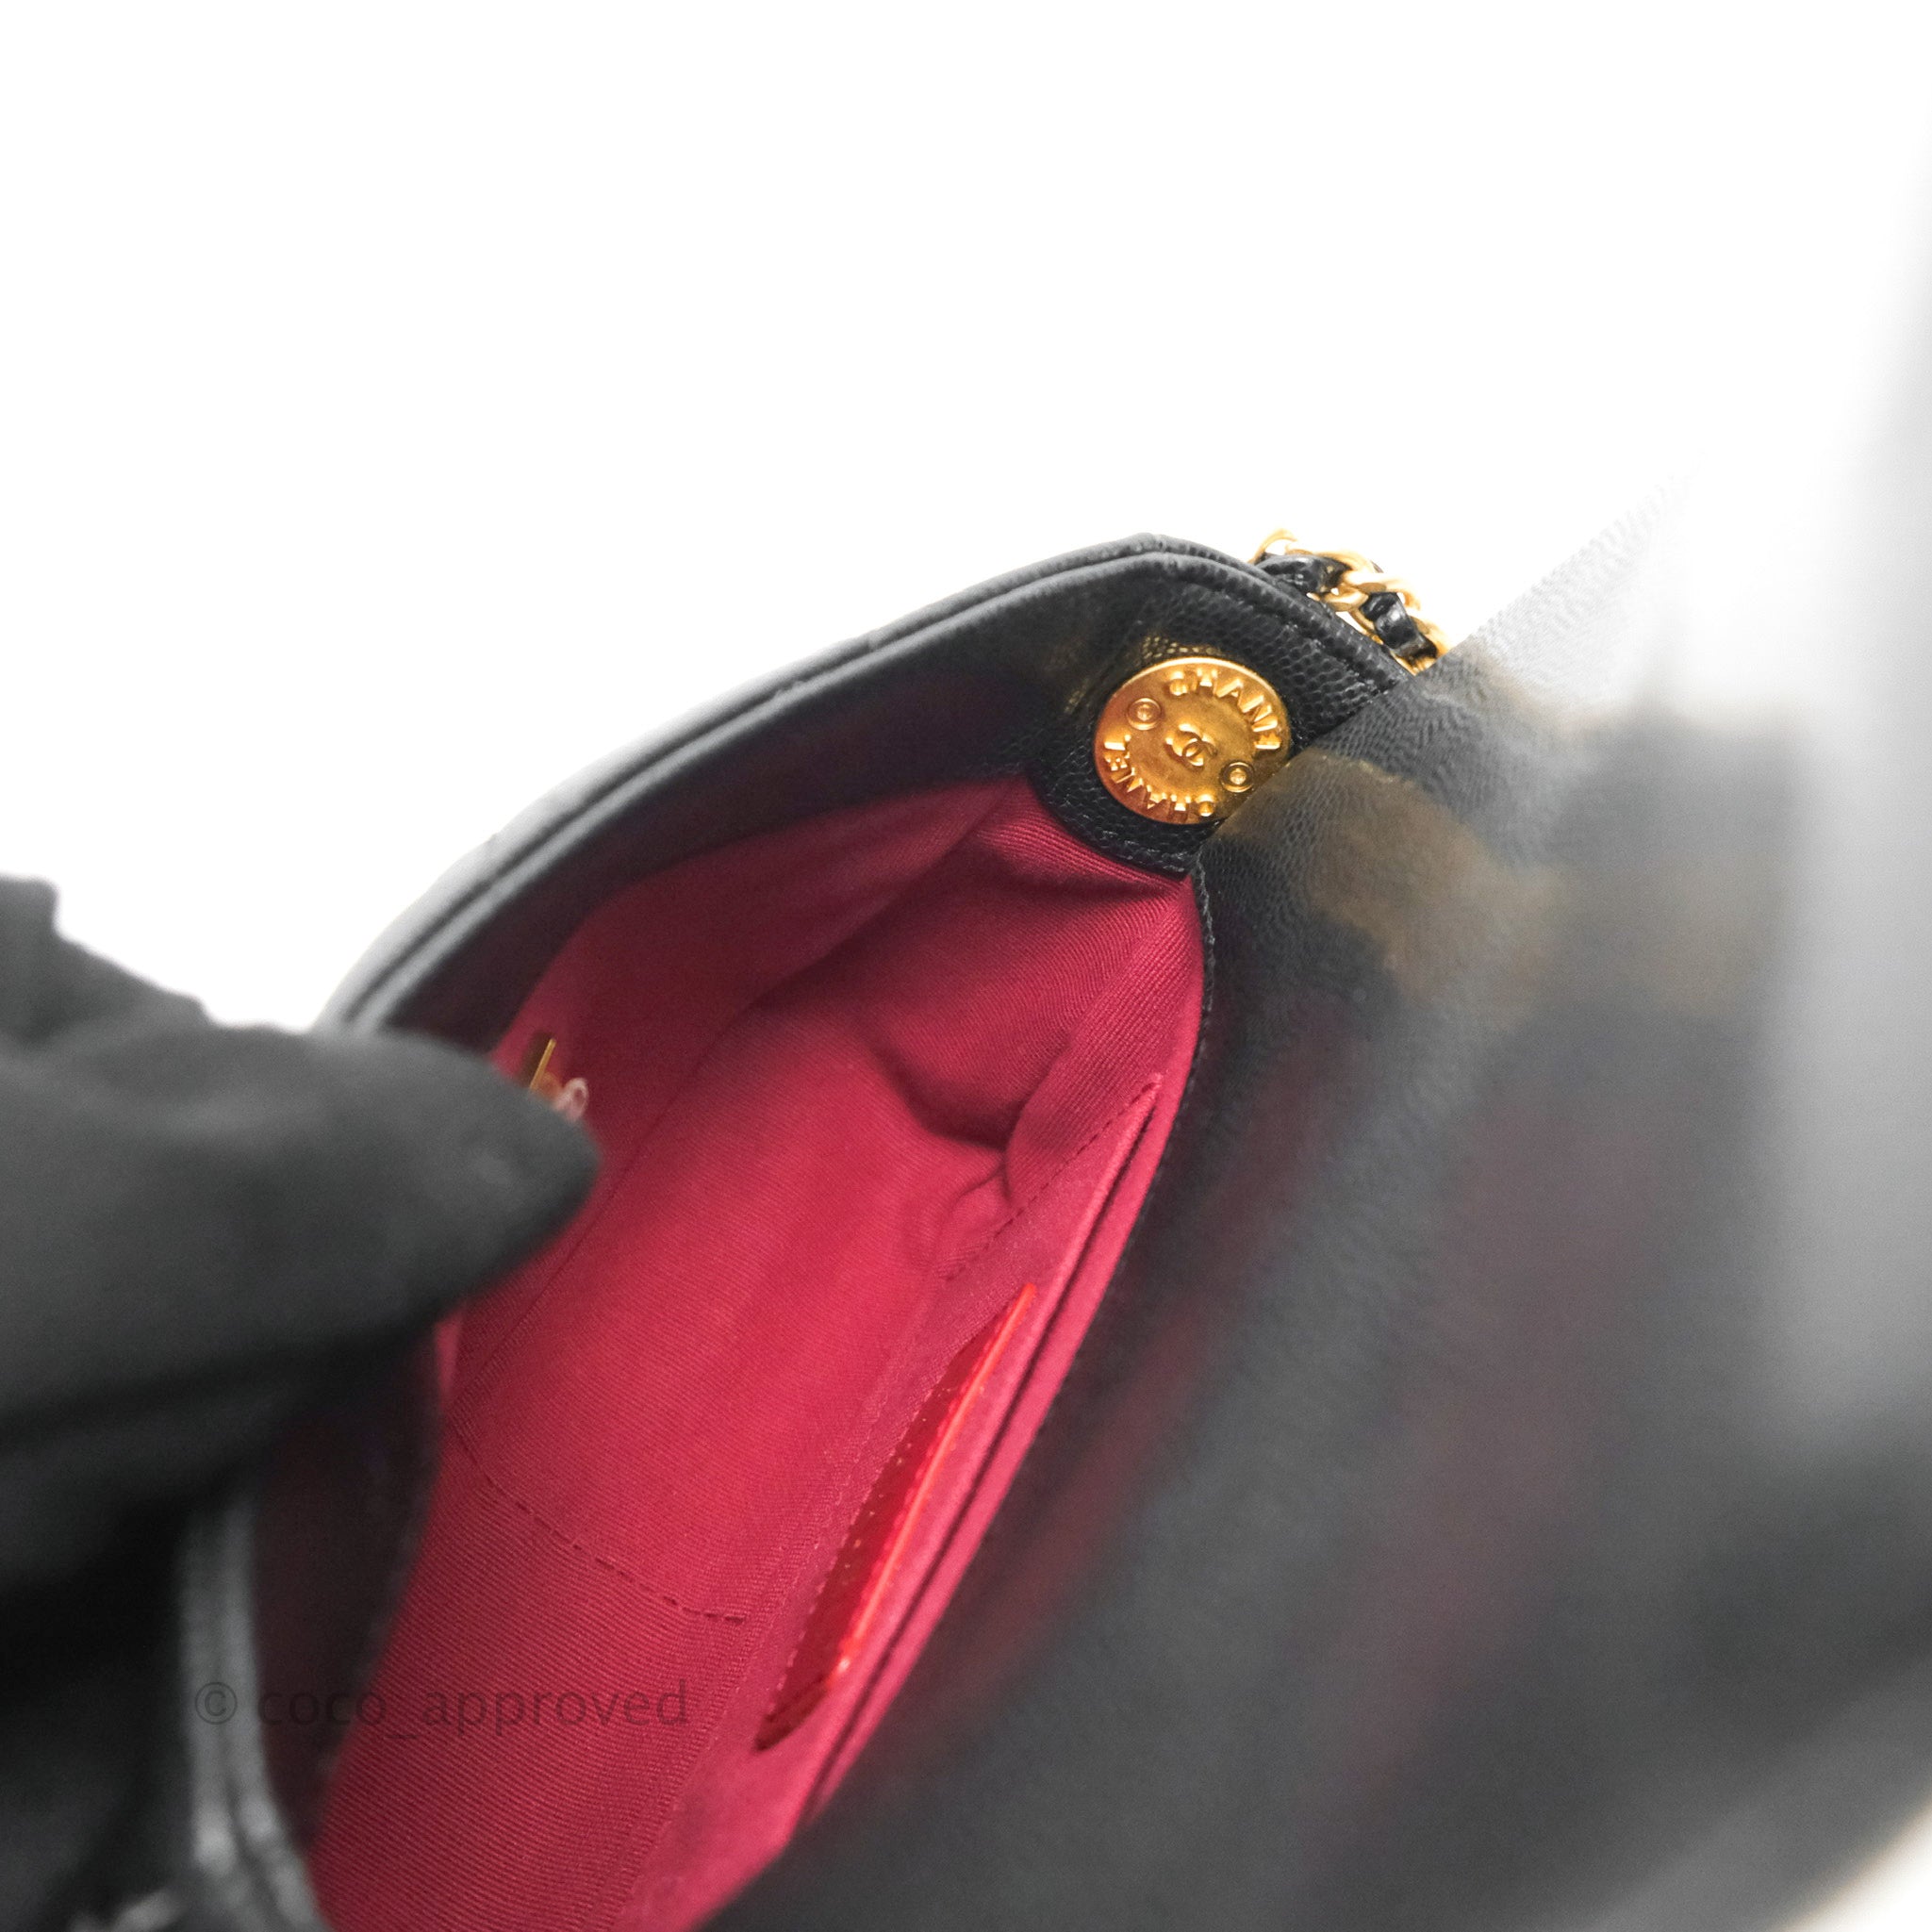 chanel vintage caviar backpack